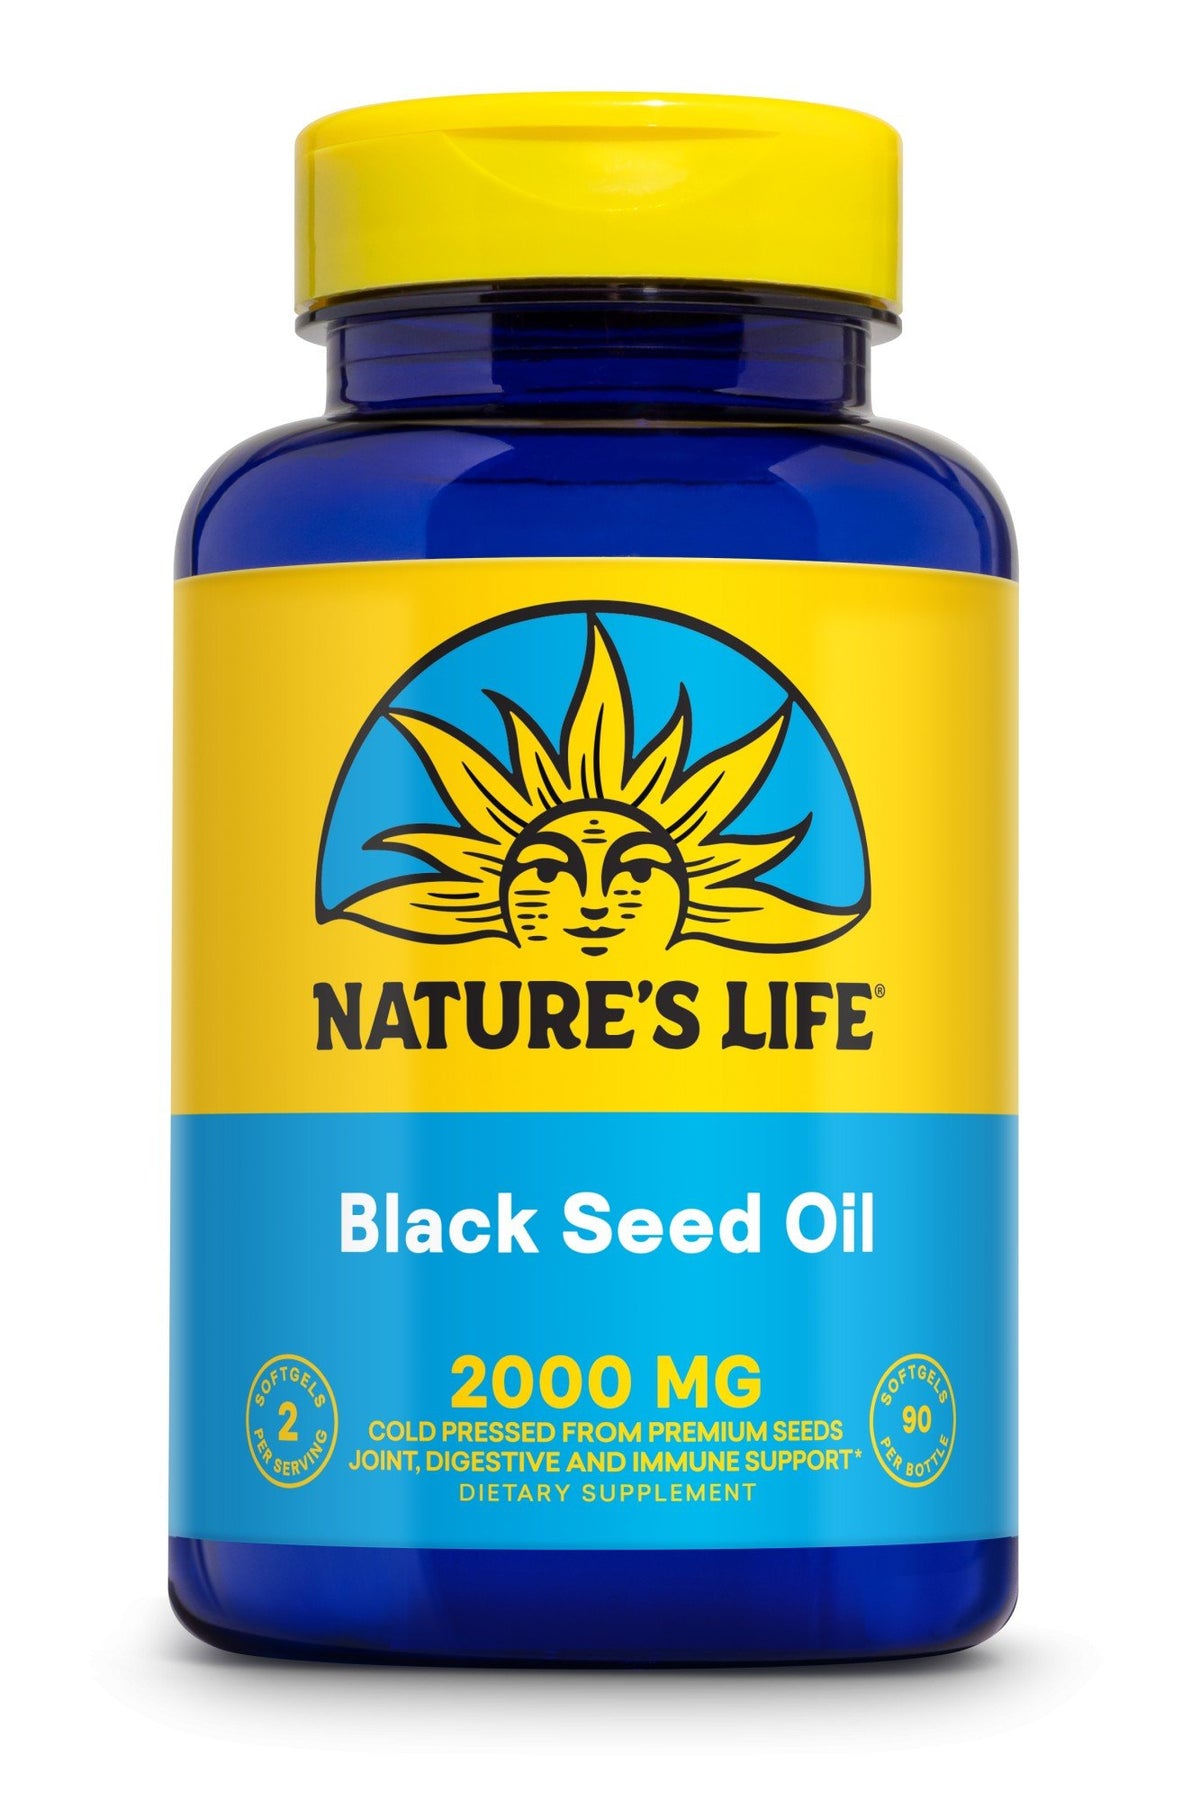 Natures Life Black Seed Oil, Cold Pressed 90 Softgel